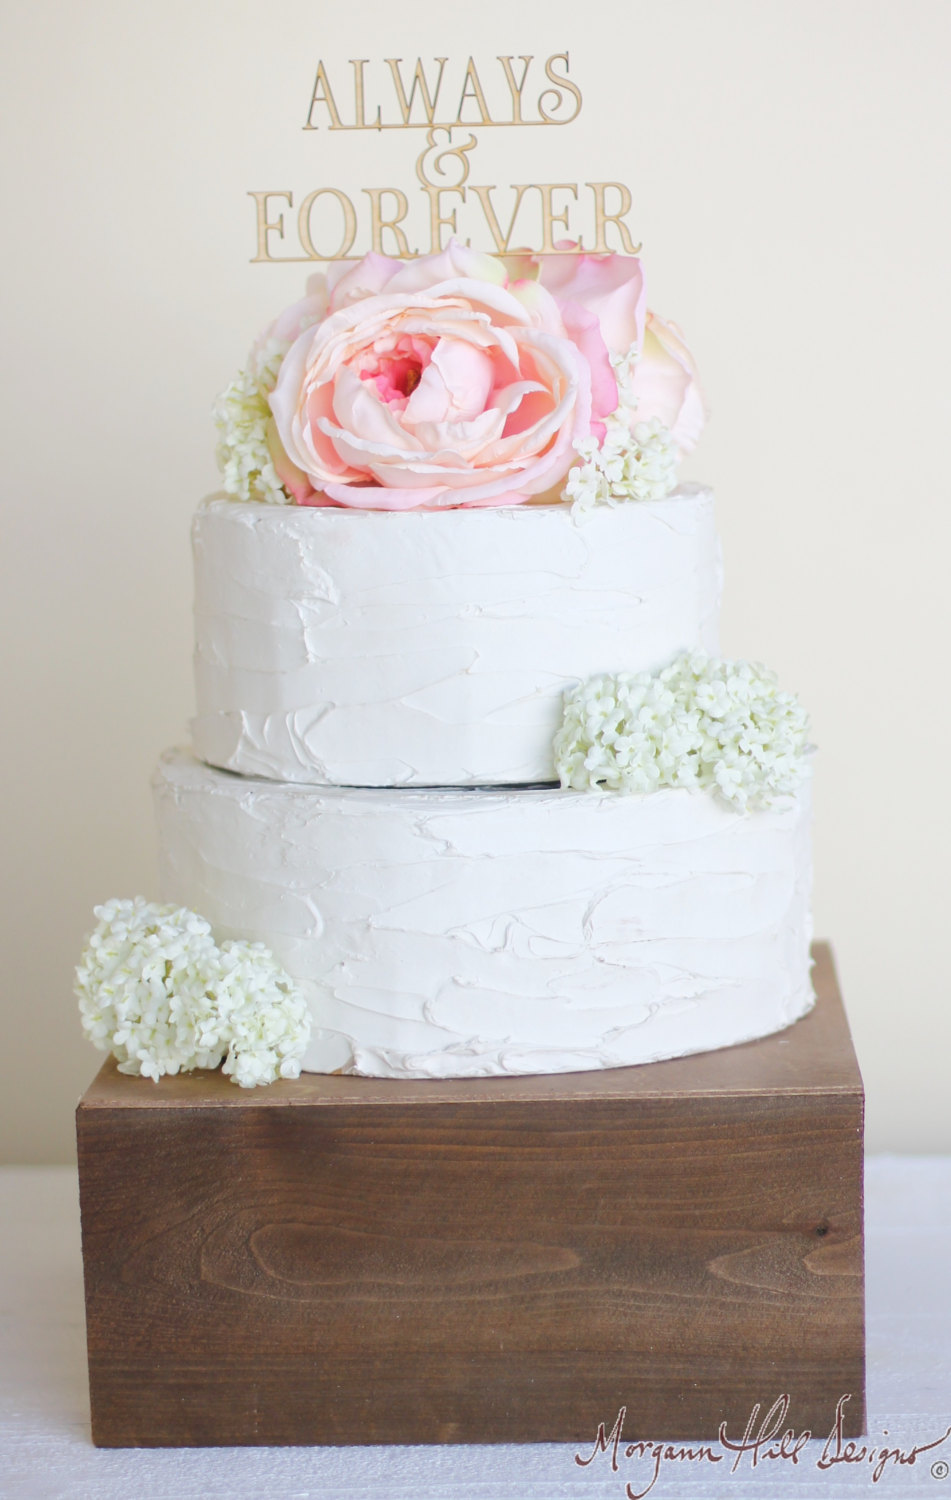 Rustic Wedding Cake Topper